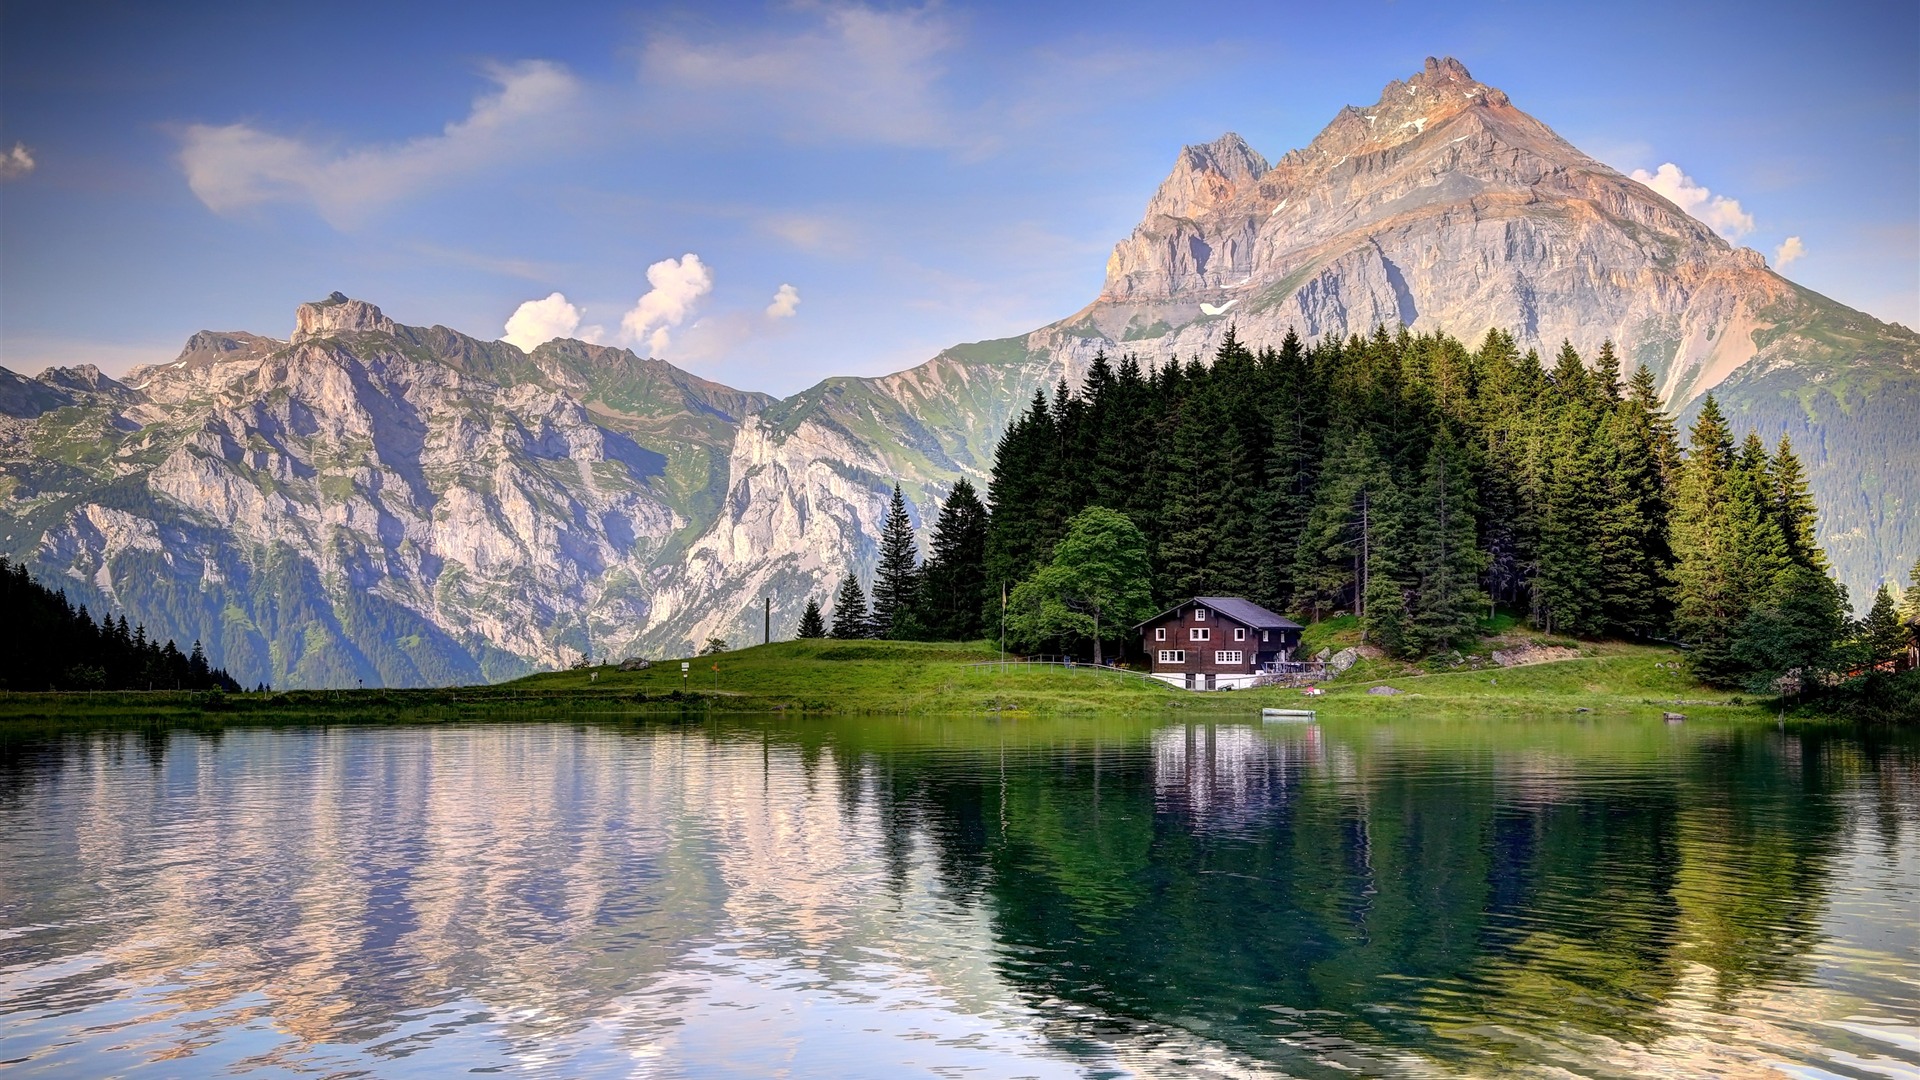 Swiss Alps Lake House 2020 Scenery HD Photogra